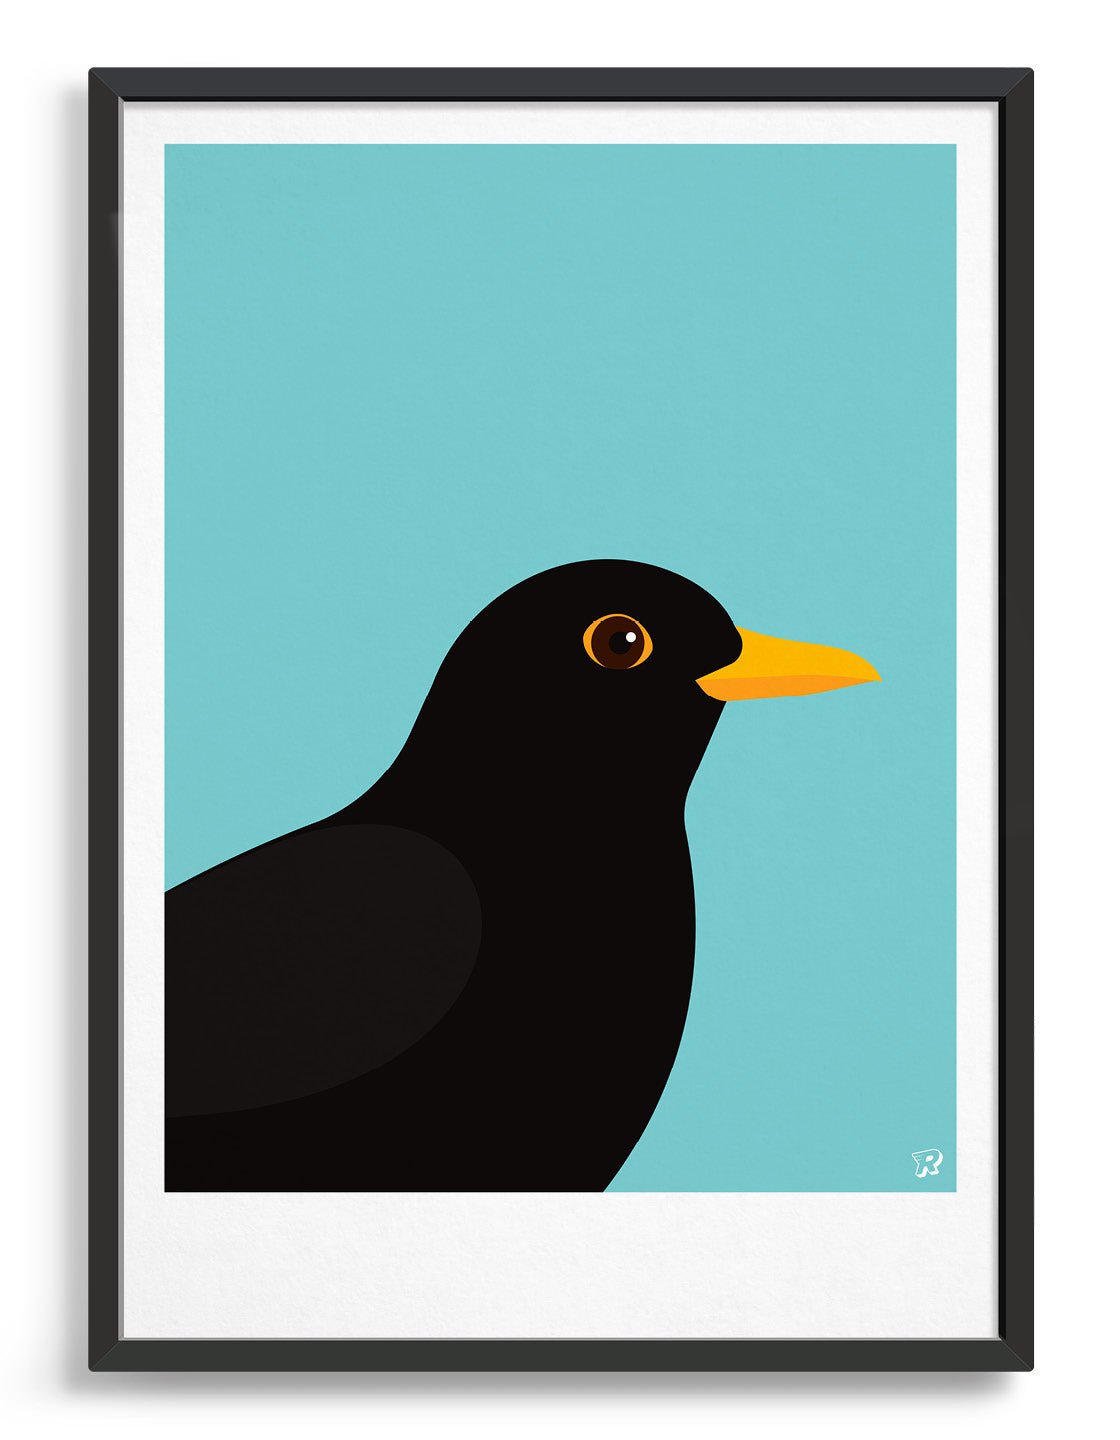 modern Blackbird illustration against a aqua blue background